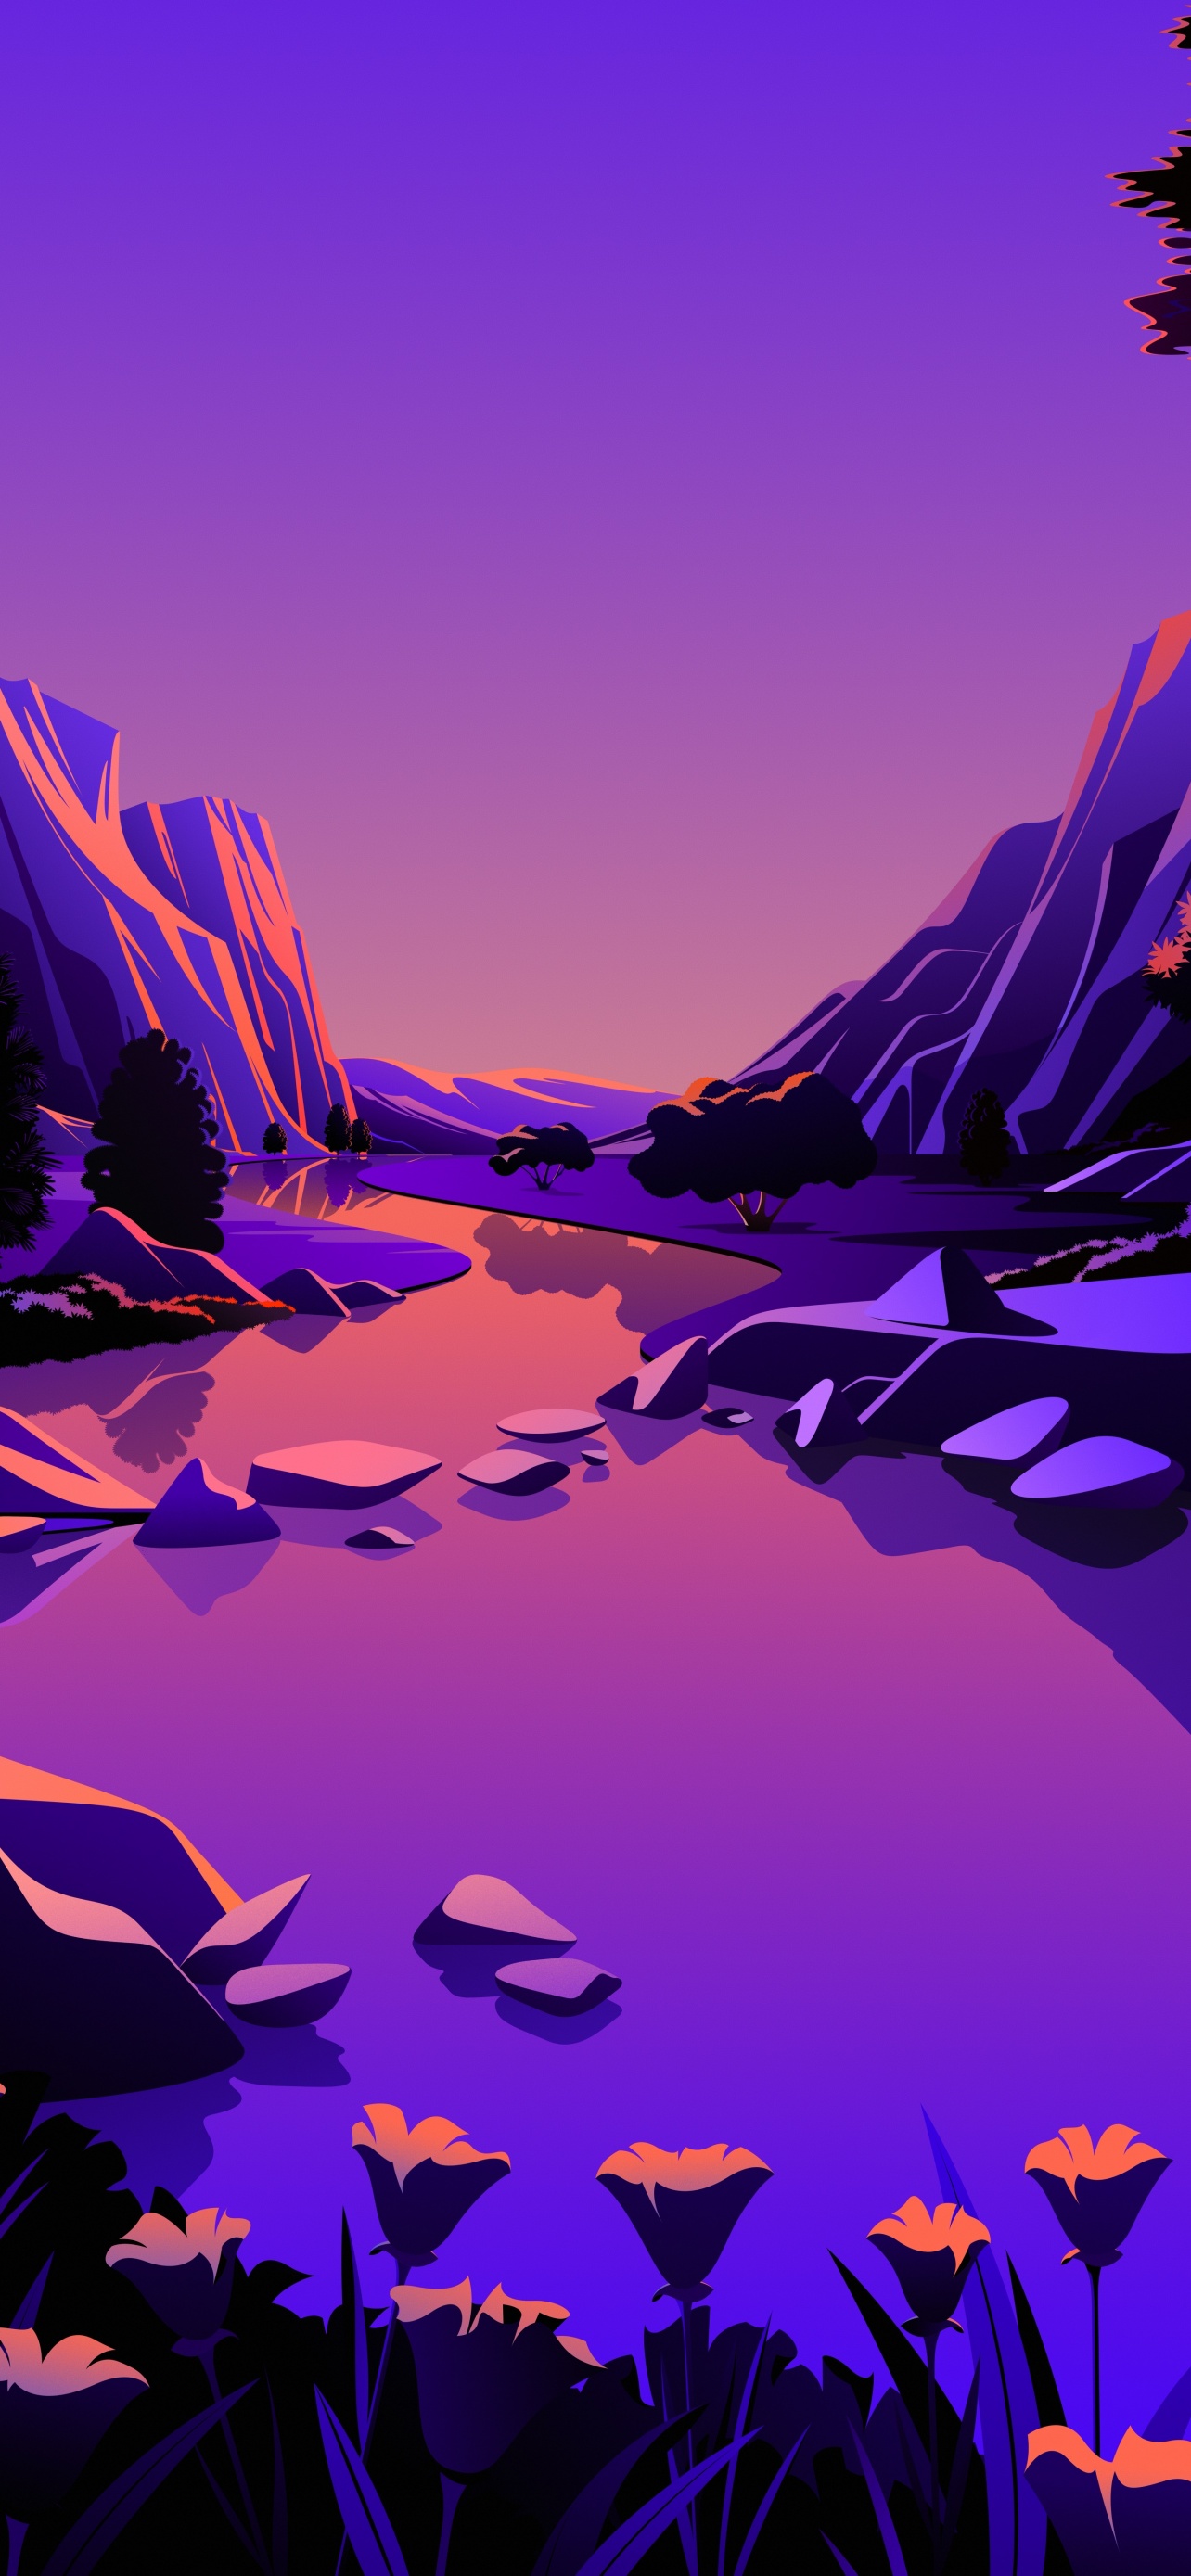 Lake Wallpaper 4K, Mountains, Rocks, Twilight, Sunset, Purple sky, Nature